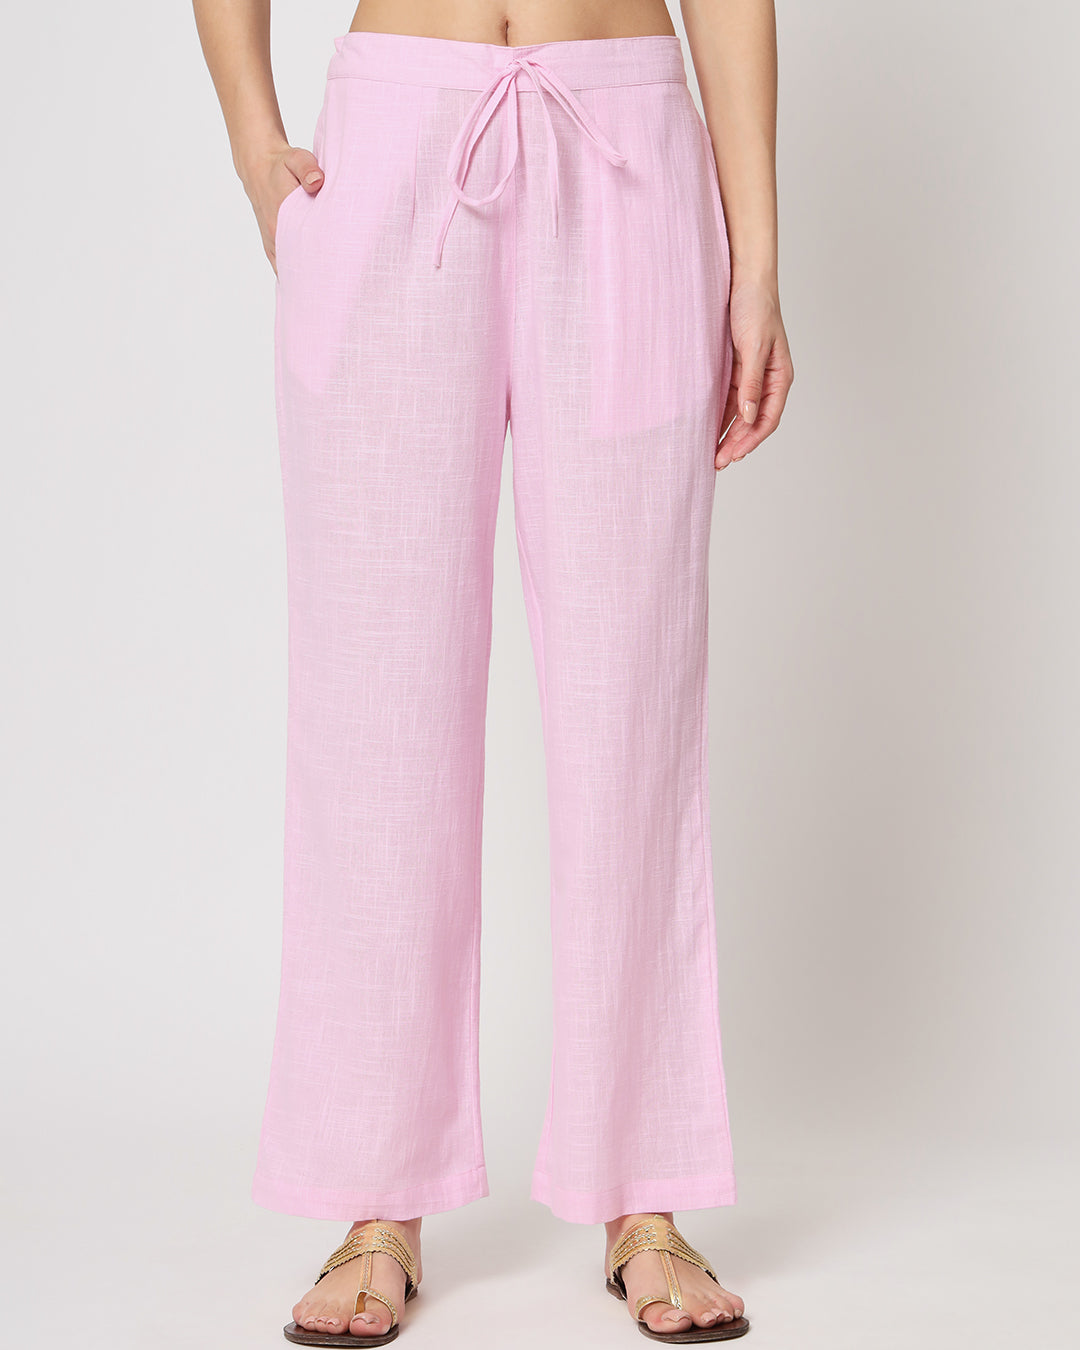 Combo: Black & Pink Mist Straight Pants- Set of 2